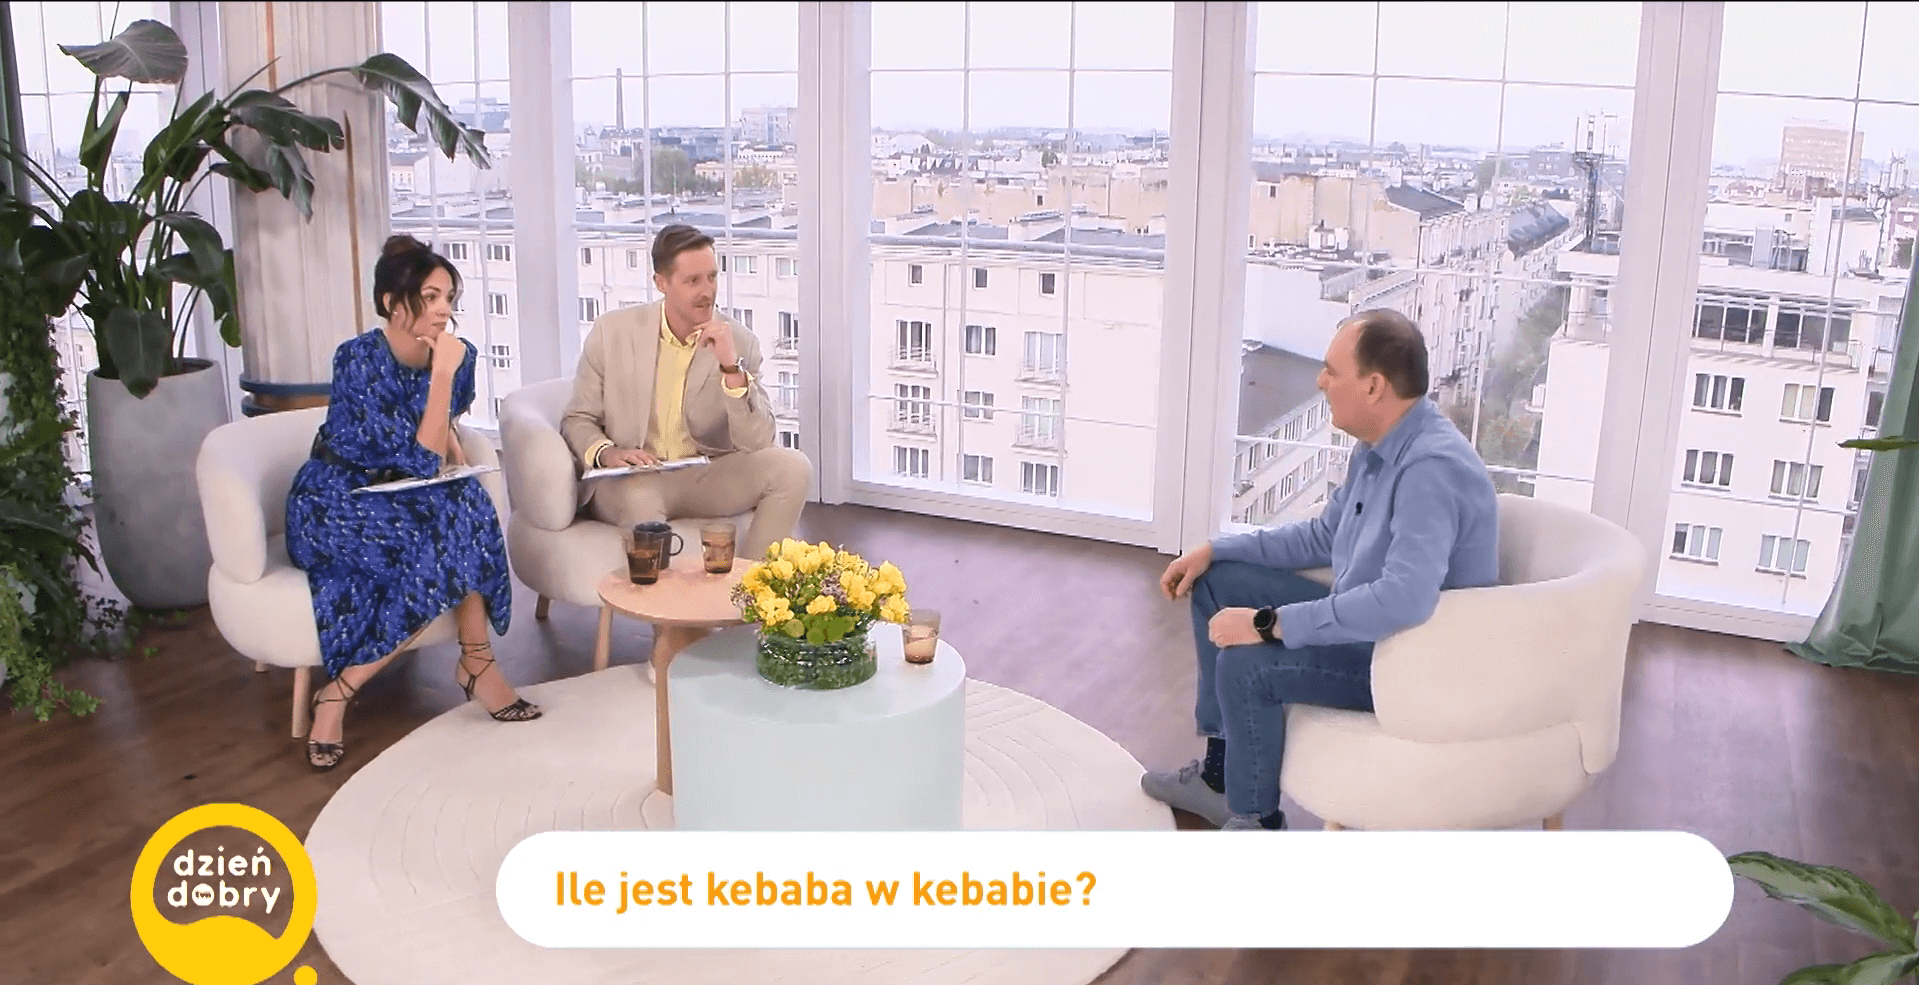 Filip Chajzer, DDTVN o kebabach, nowy biznes Filipa Chajzera - budka z kebabami